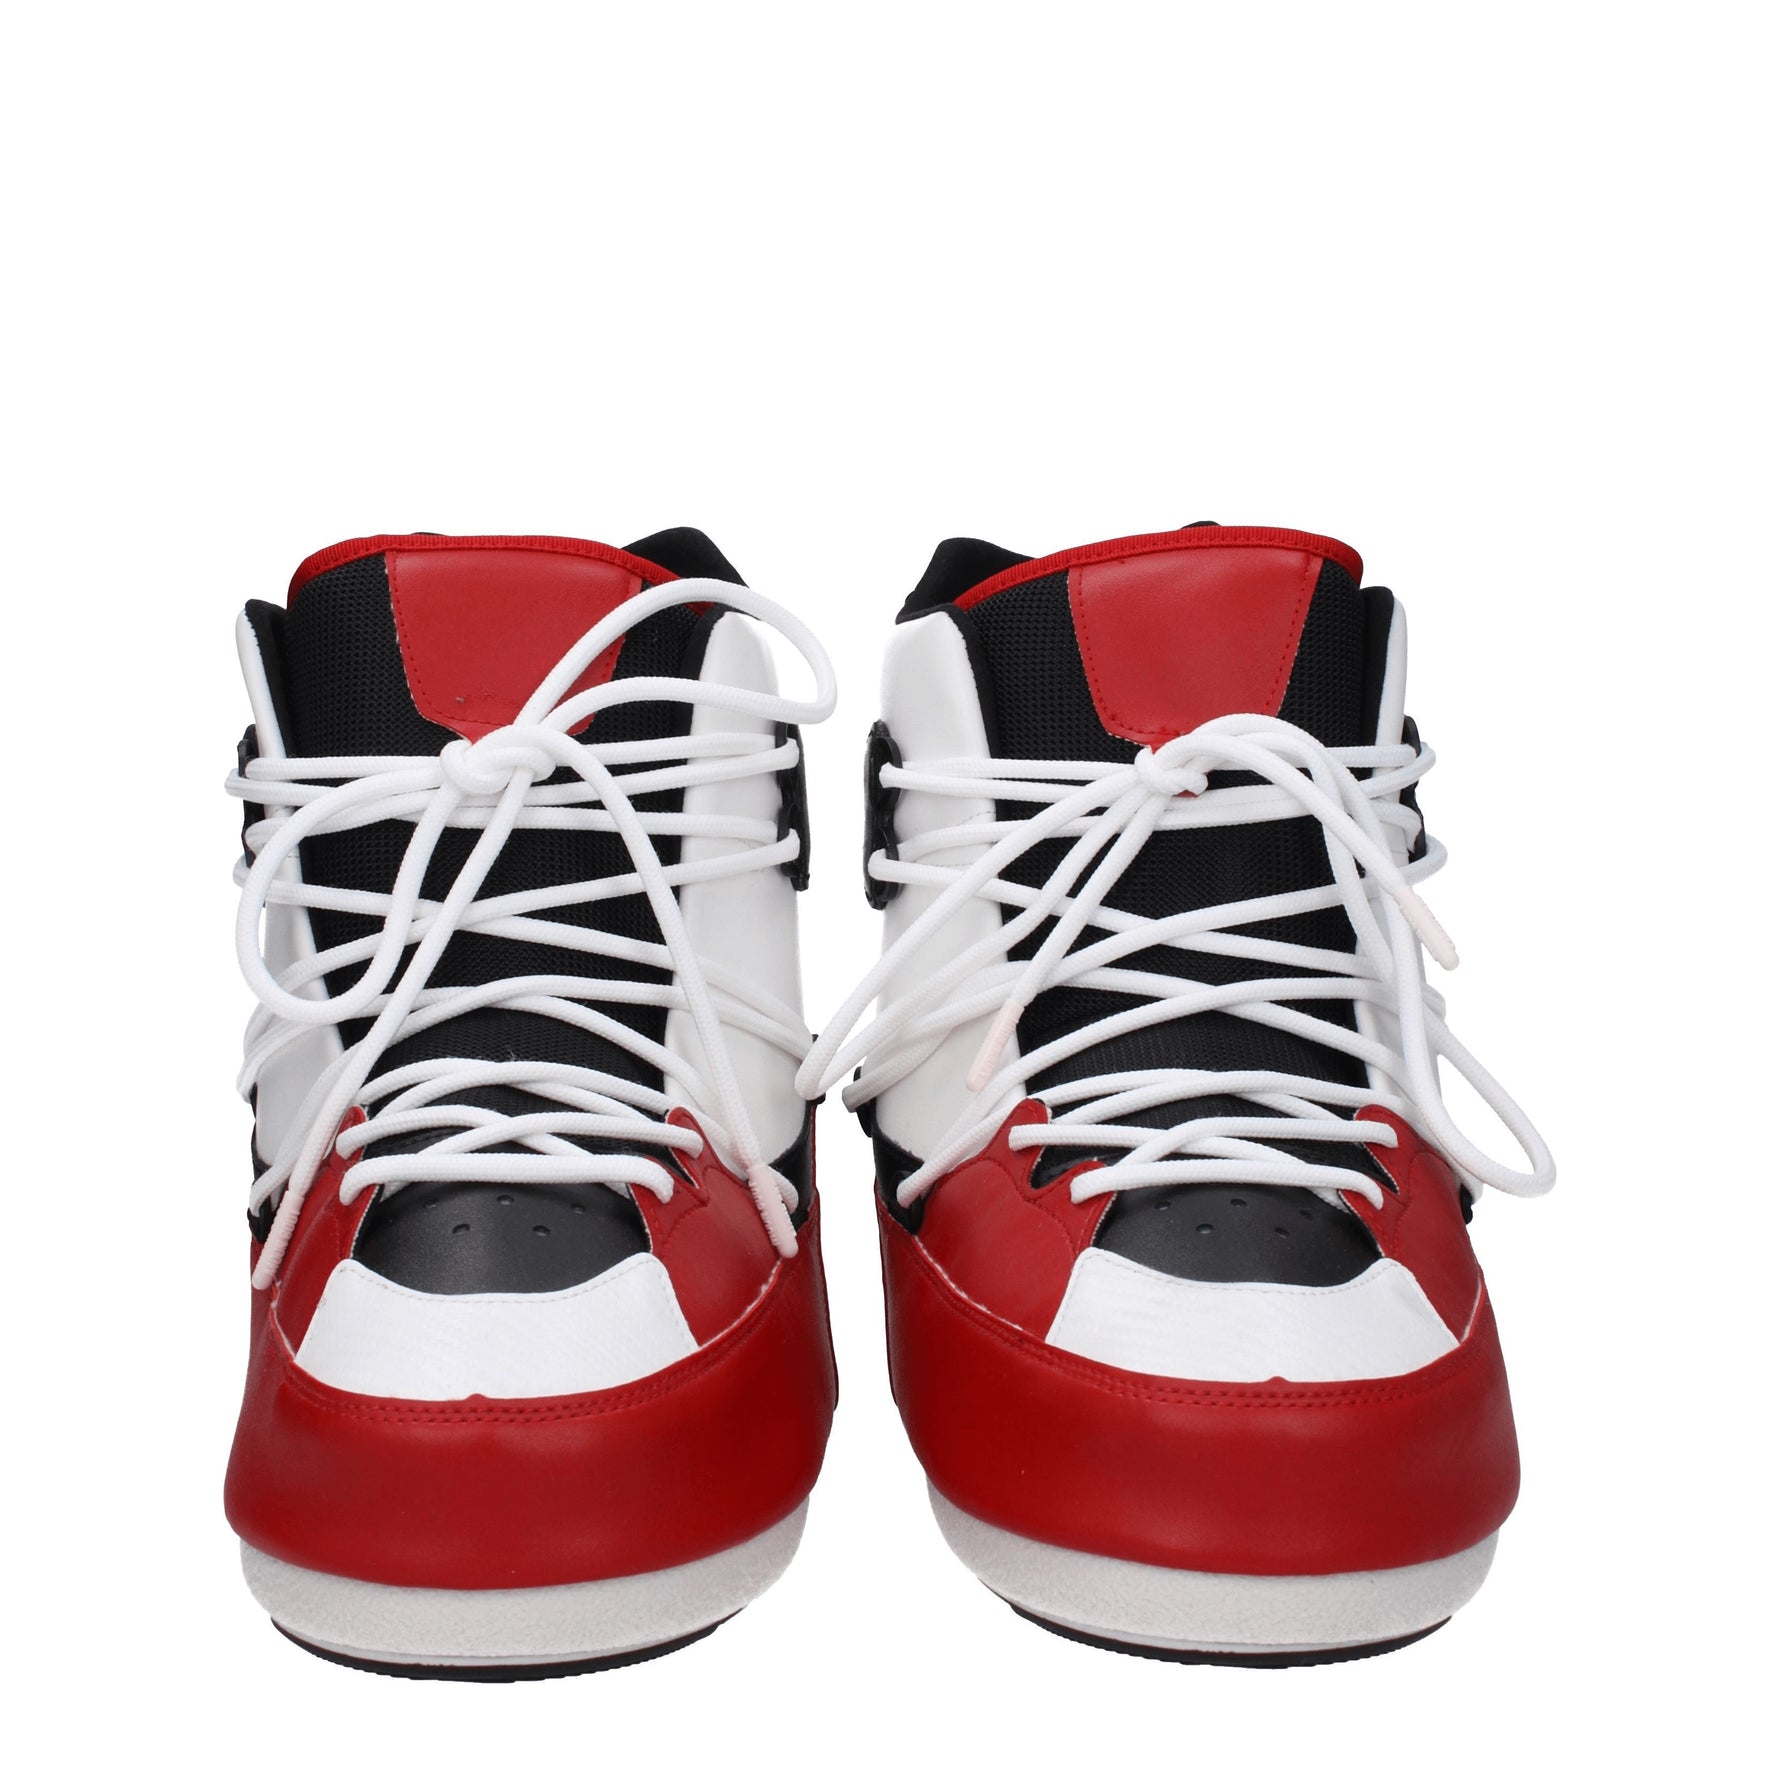 Moon Boot Stivaletti sneaker mid Uomo Tessuto Bianco Rosso